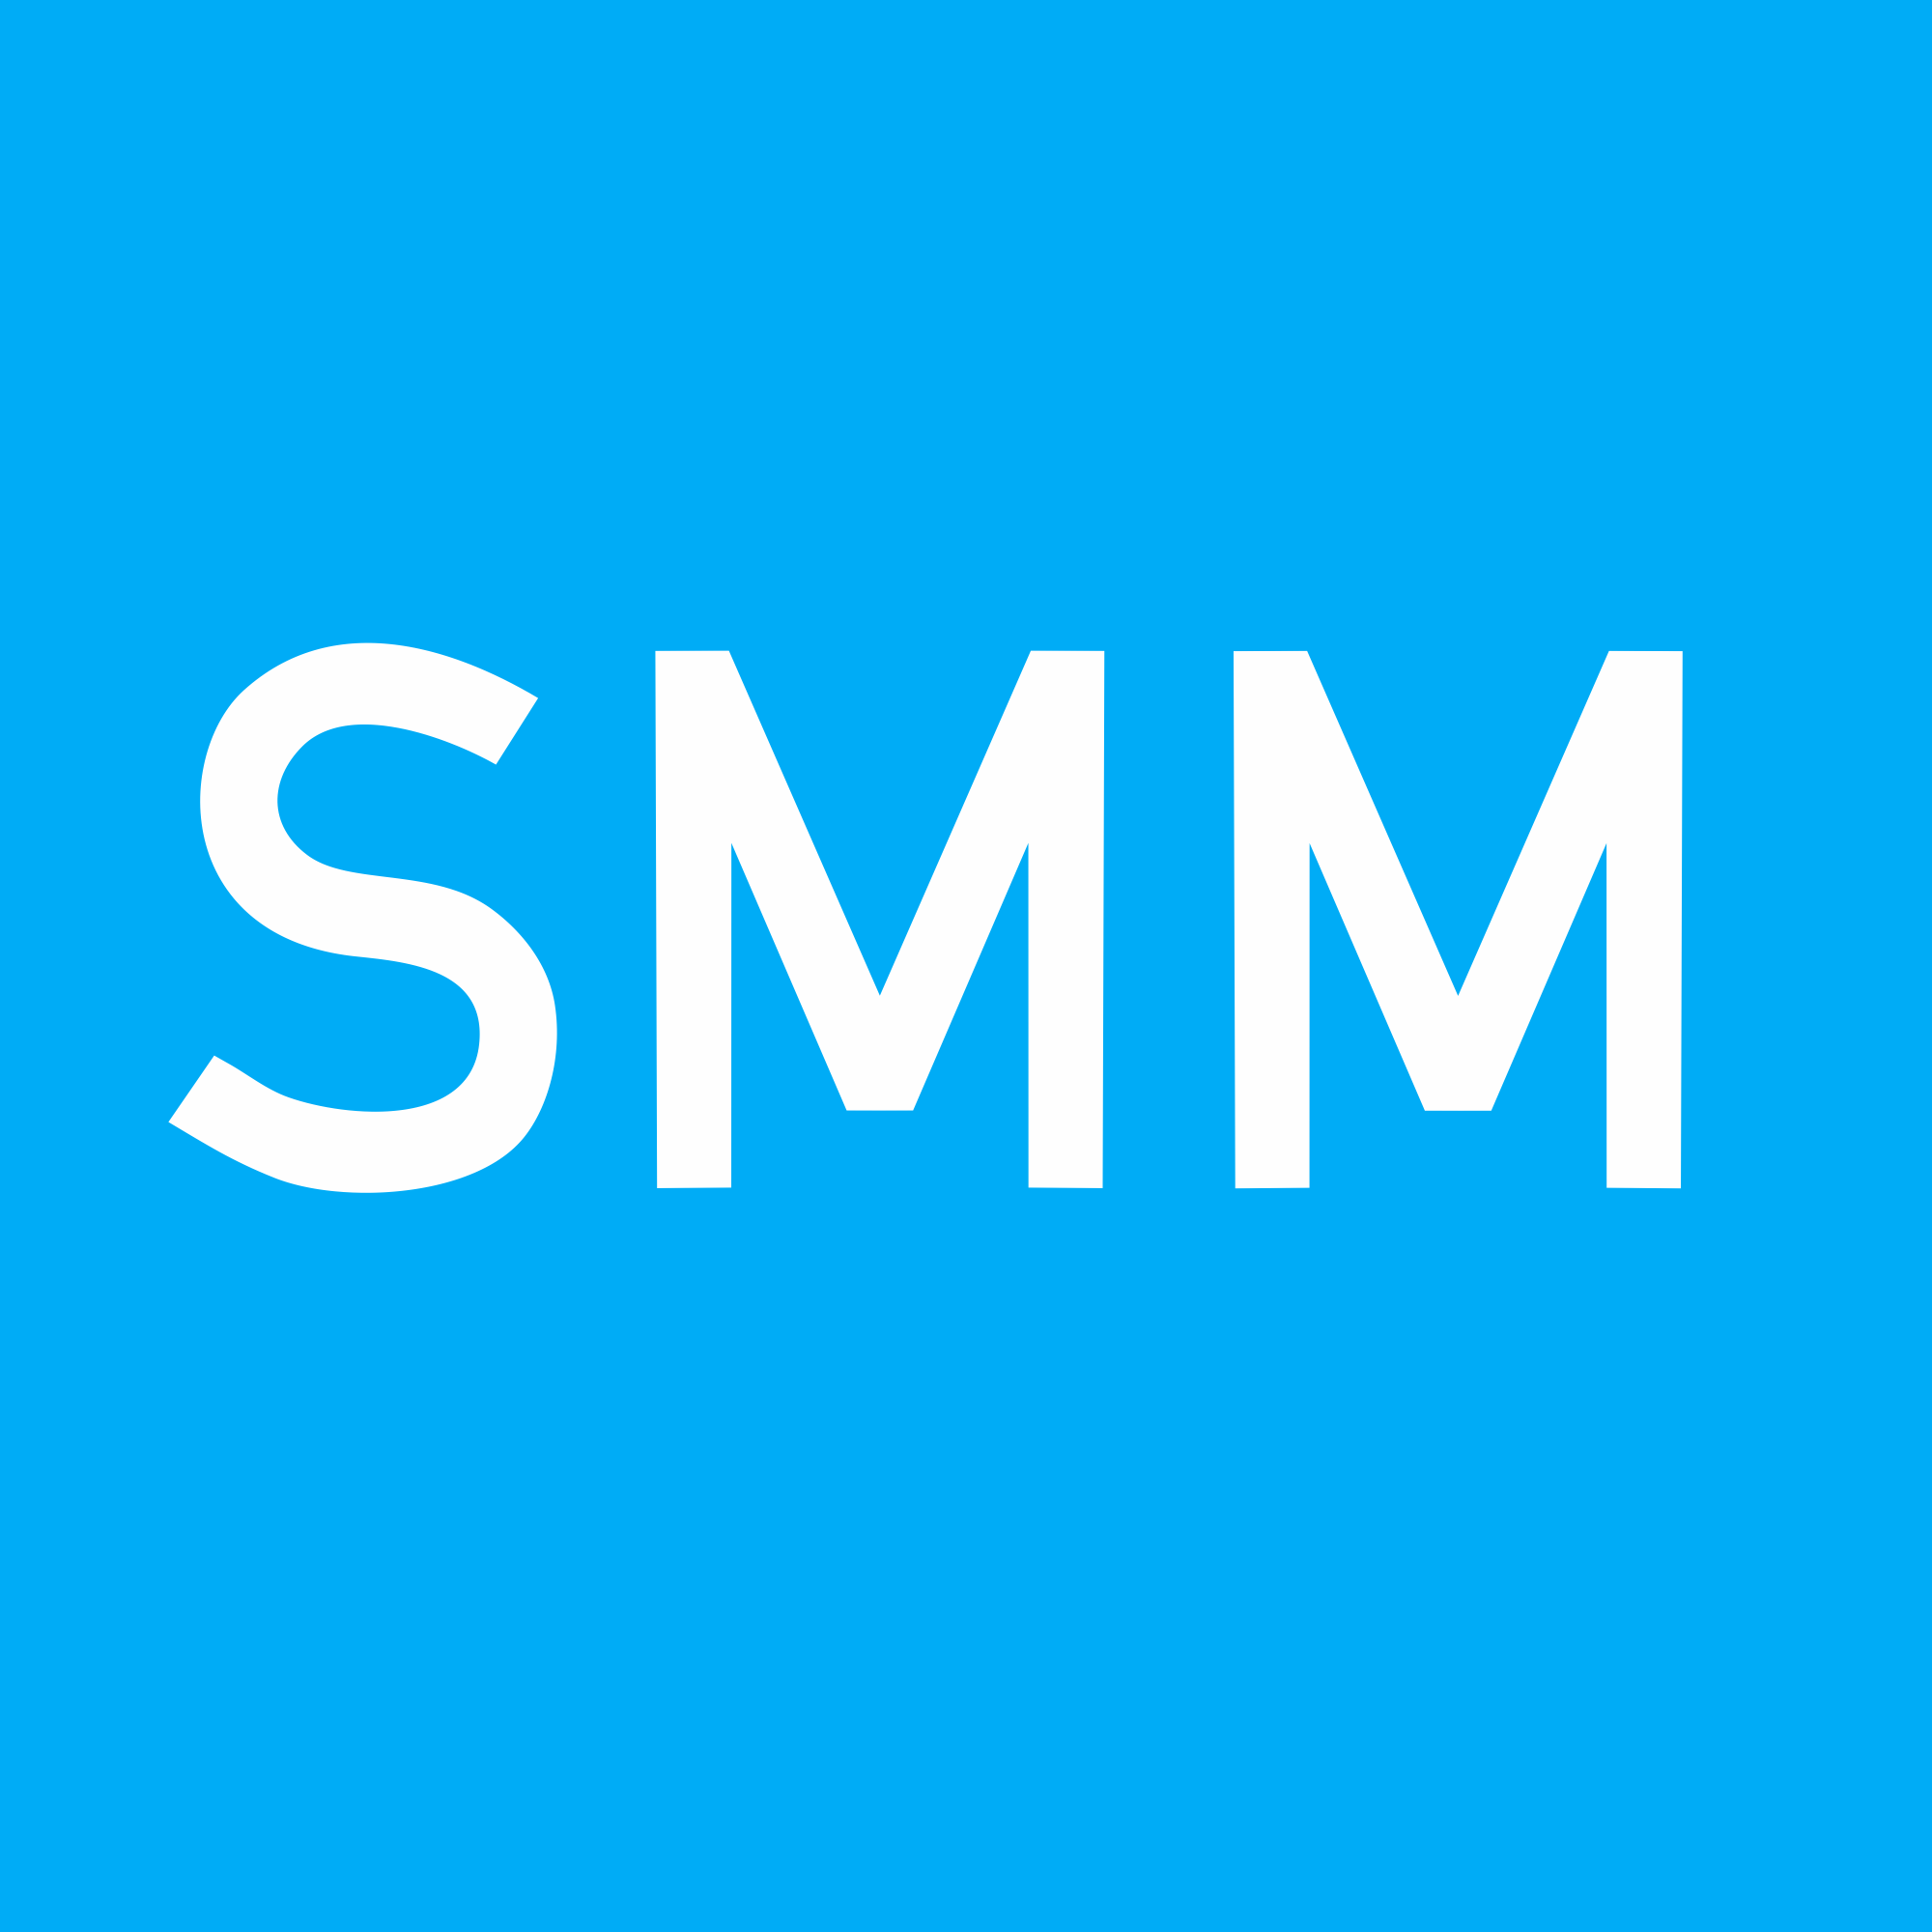 Smm в телеграмме. Smm логотип. Smm надпись. Логотип СММ менеджера. СV лого.